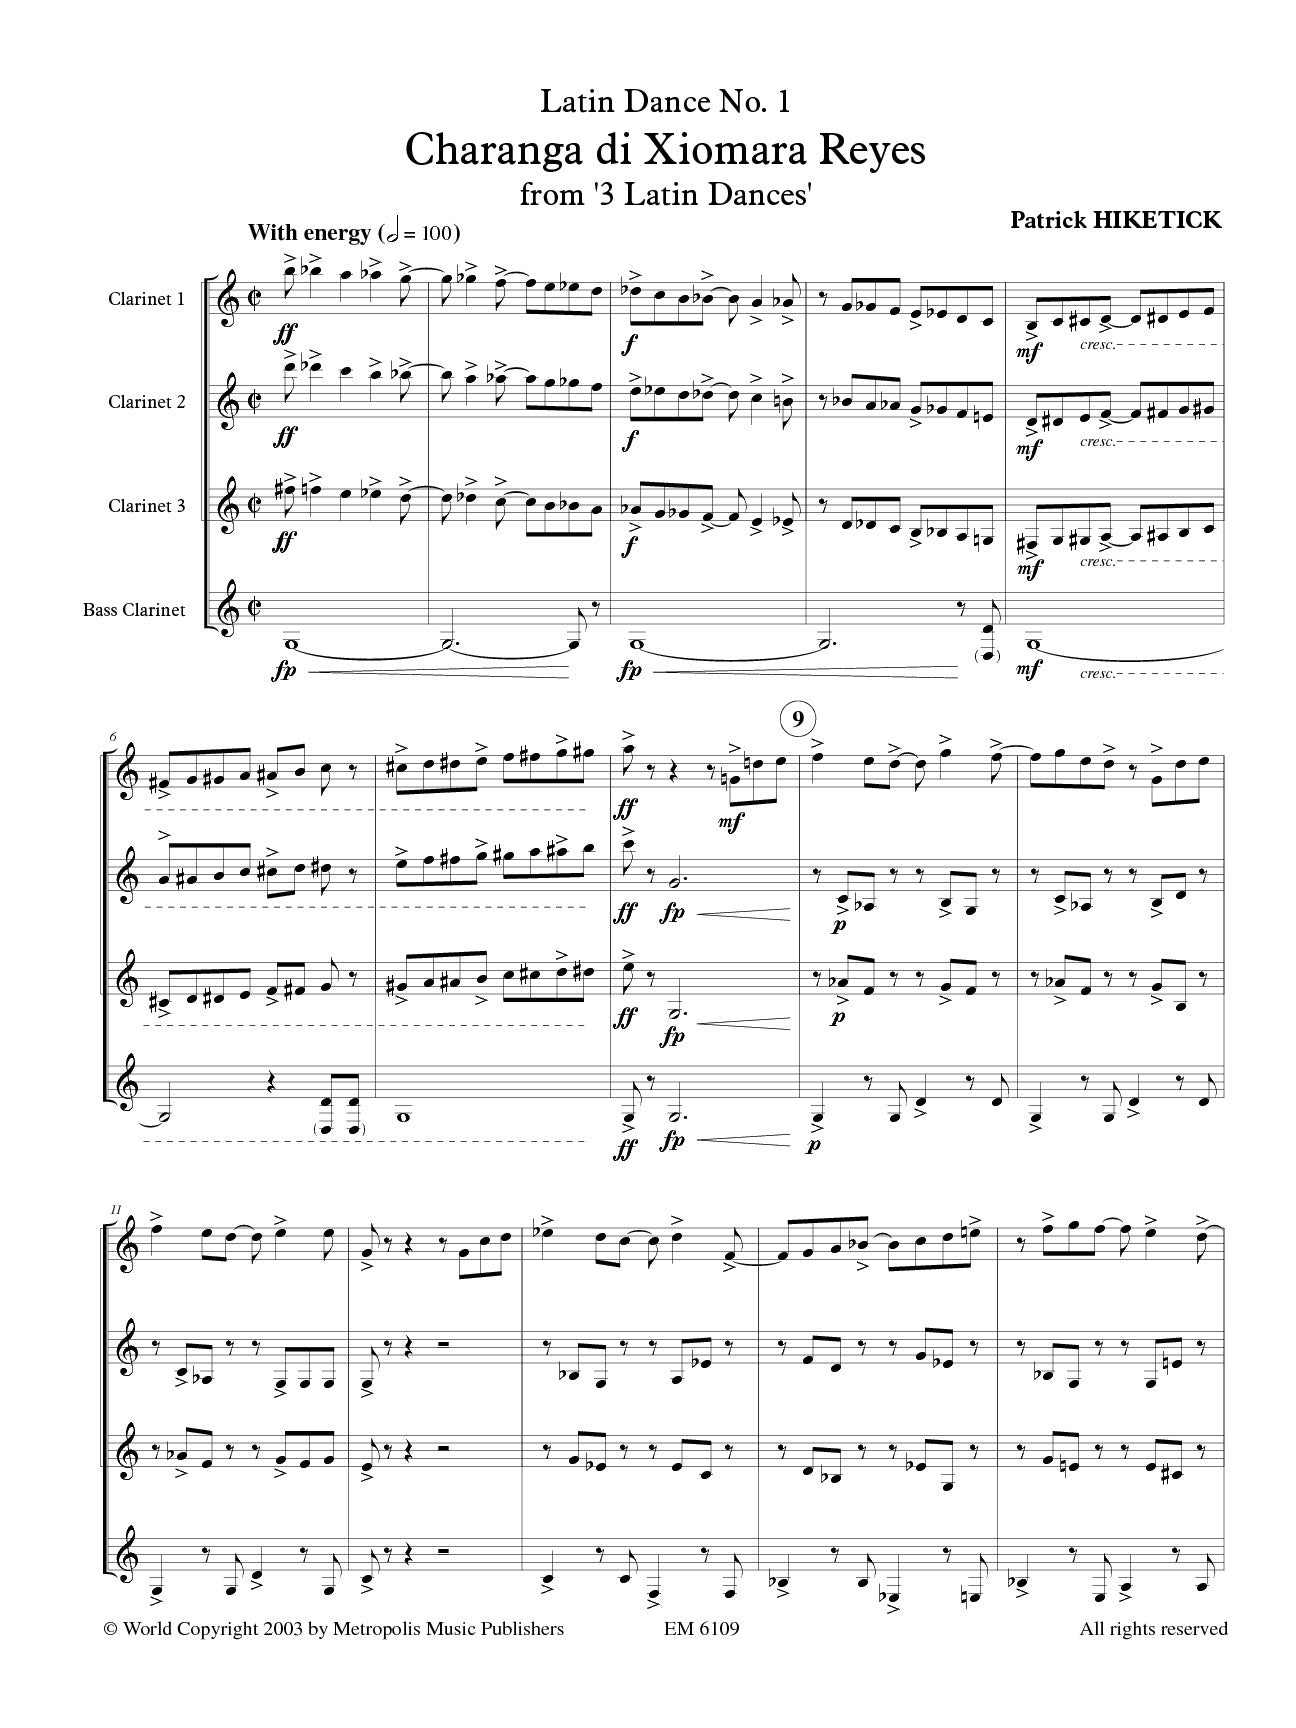 Hiketick - Latin Dances no.1 (Charanga) for Clarinet Quartet